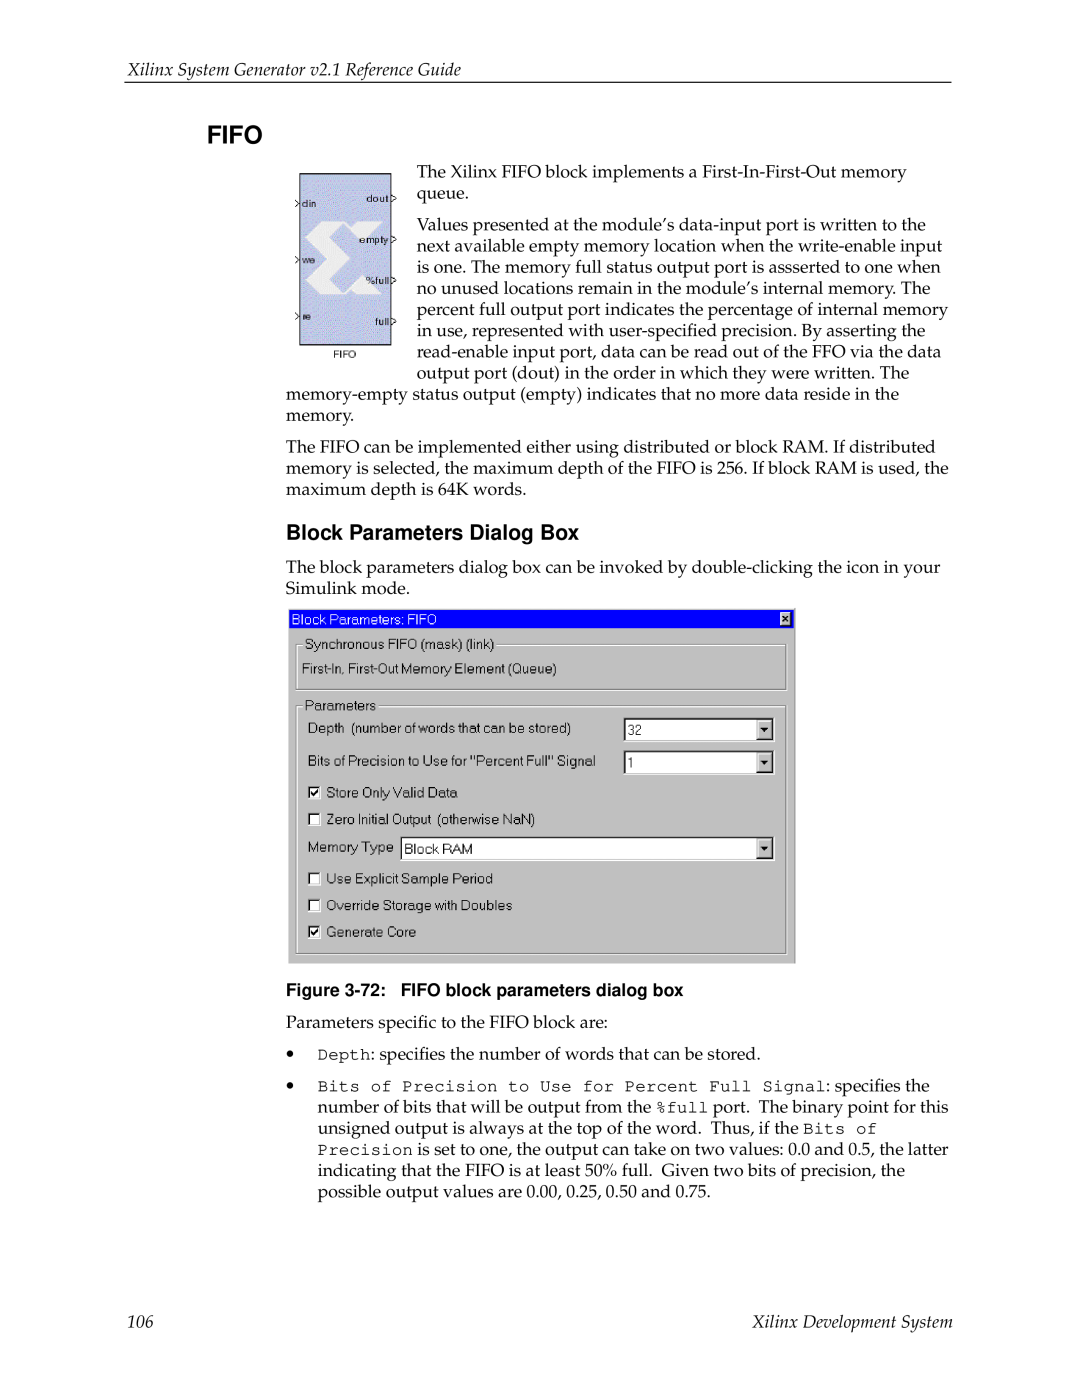 Xilinx V2.1 Fifo, Block Parameters Dialog Box, Xilinx System Generator v2.1 Reference Guide, Xilinx Development System 